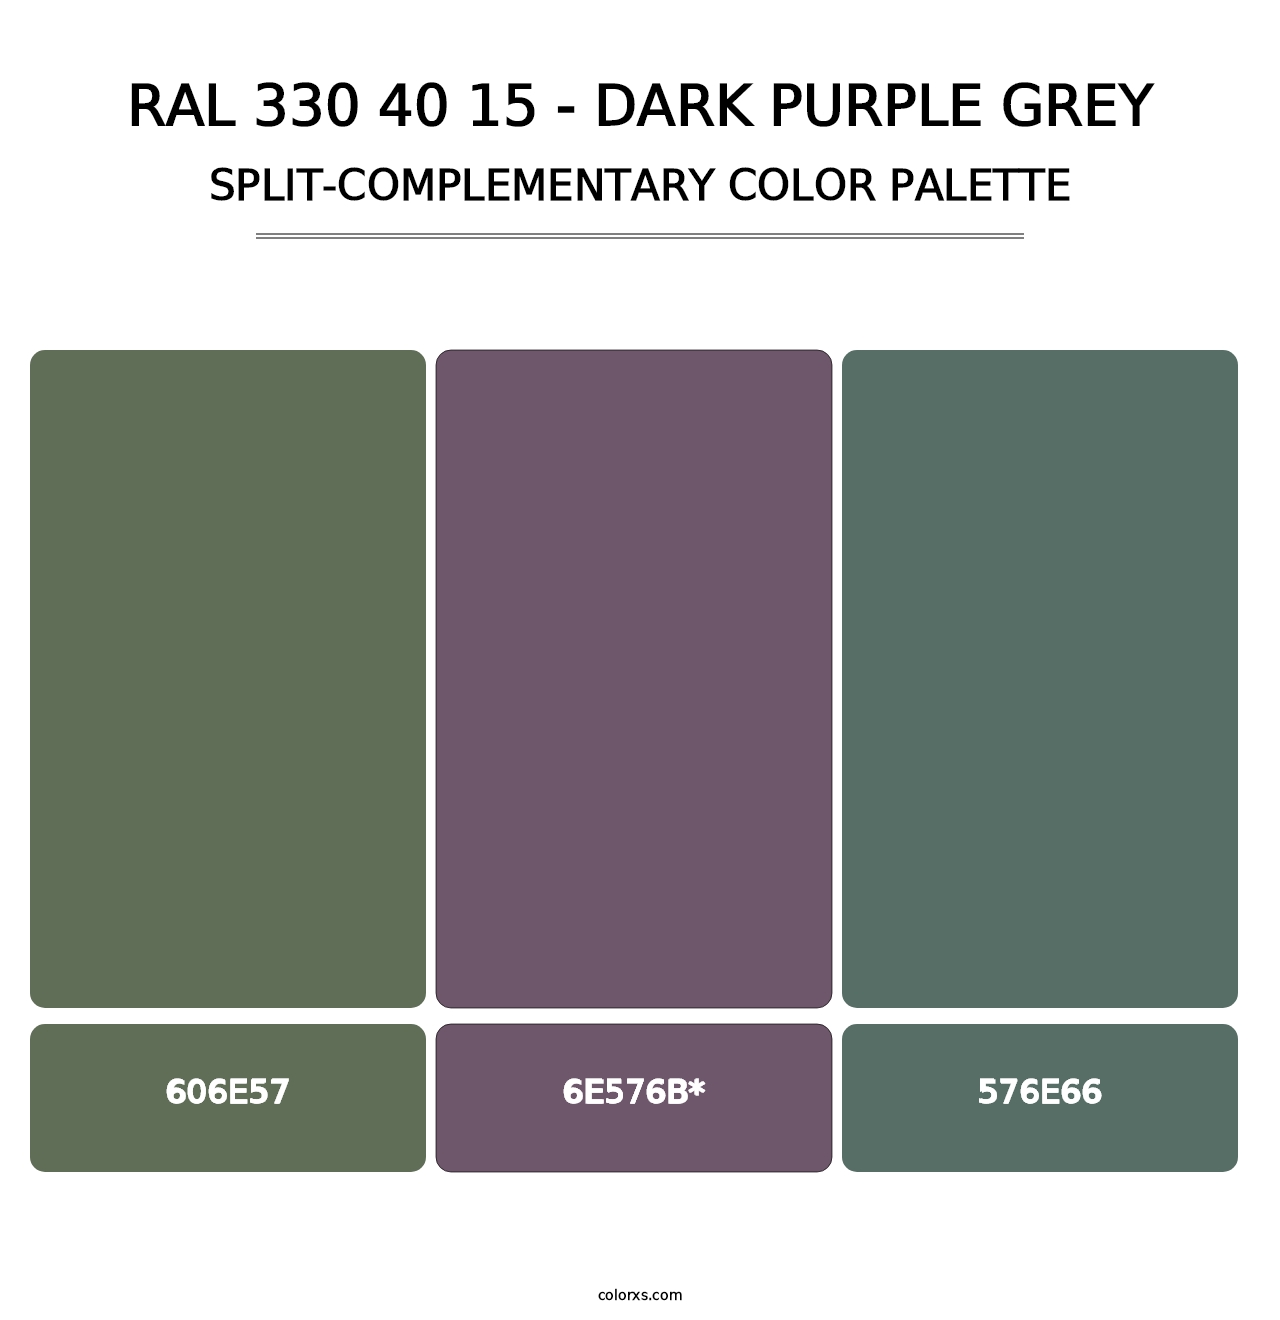 RAL 330 40 15 - Dark Purple Grey - Split-Complementary Color Palette